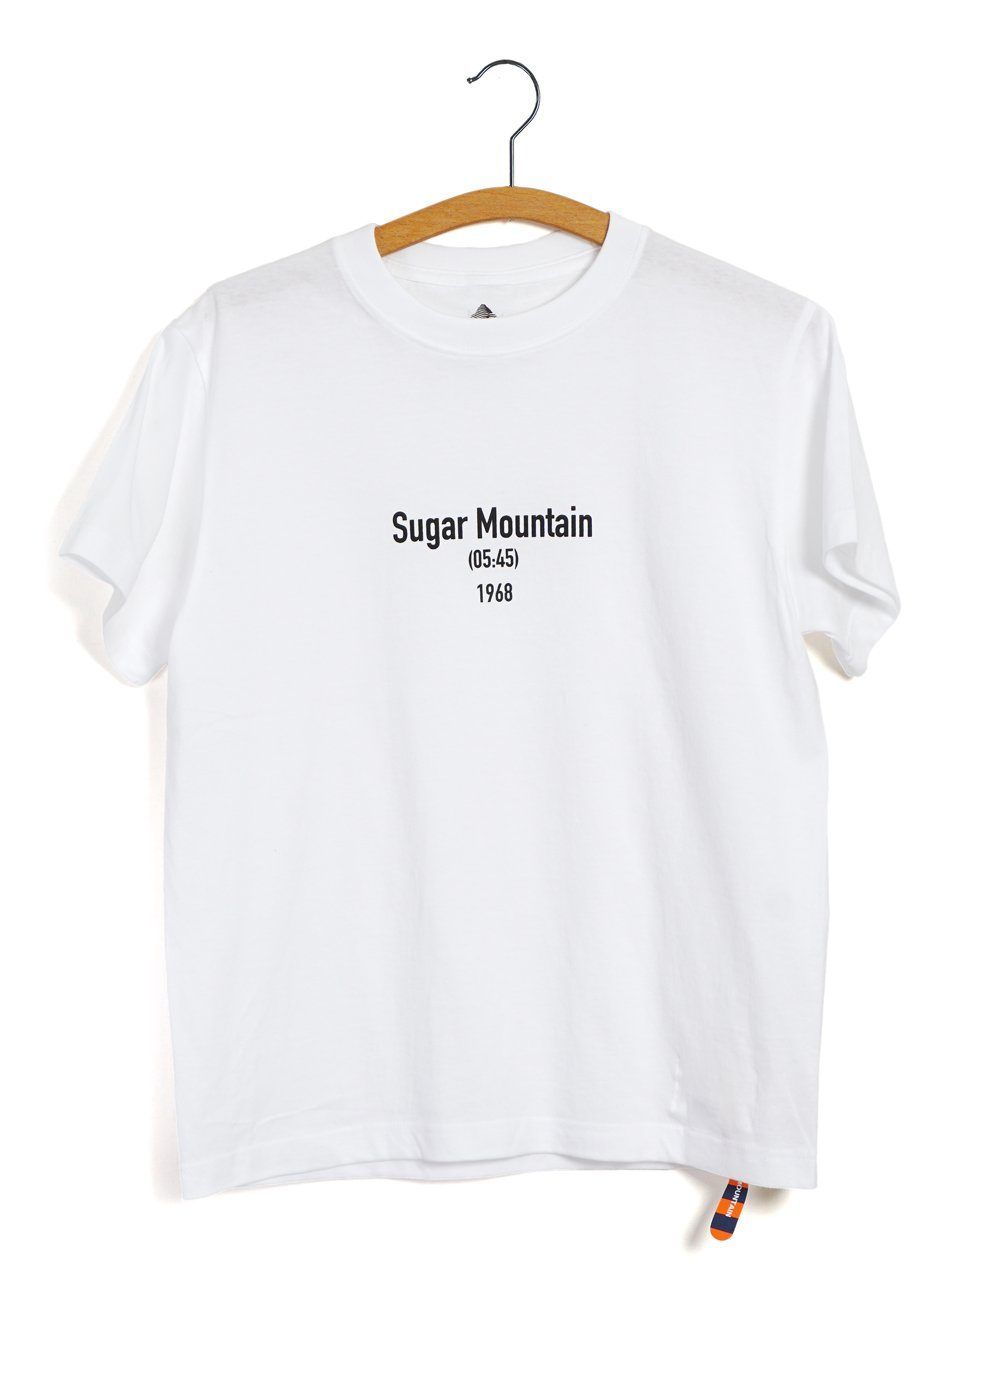 MOUNTAIN RESEARCH - SUGAR MOUNTAIN T-SHIRT | White - HANSEN Garments